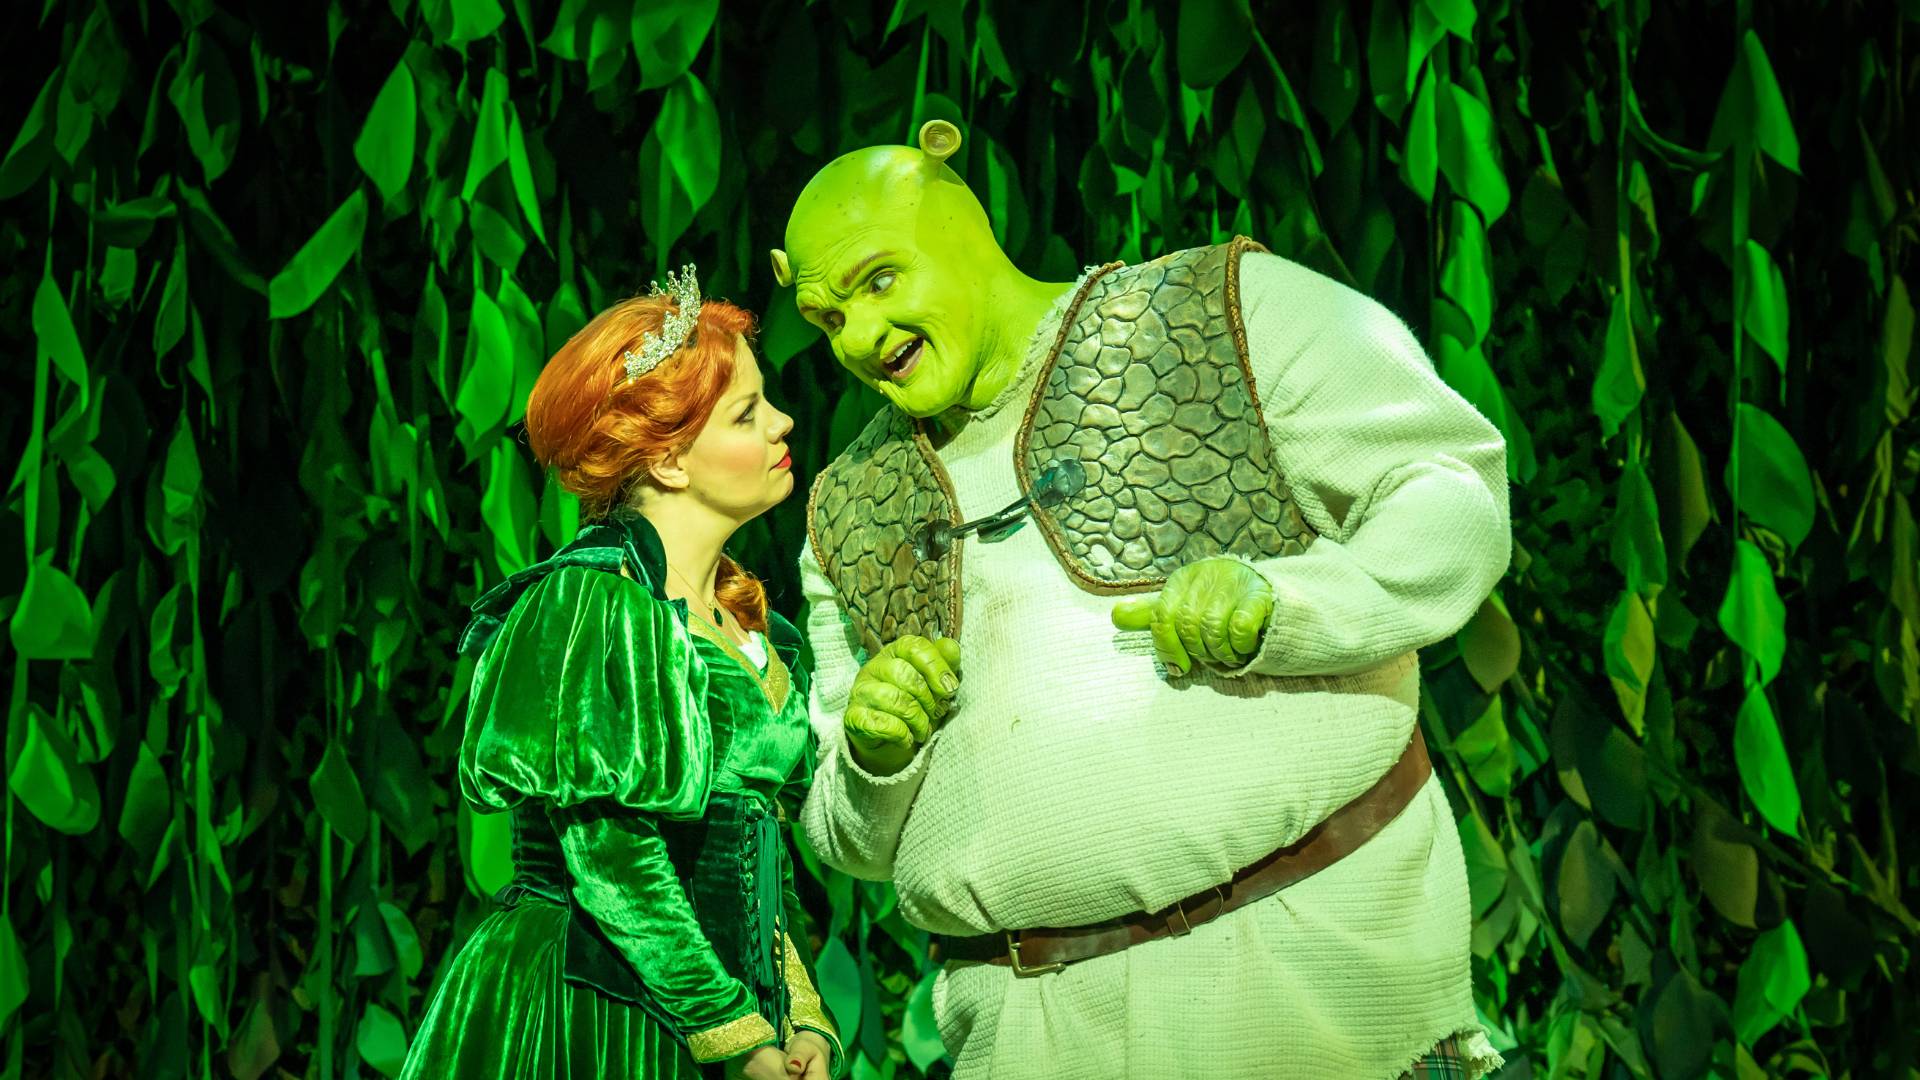 Shrek The Musical will Transfer to London's Eventim Apollo in Summer